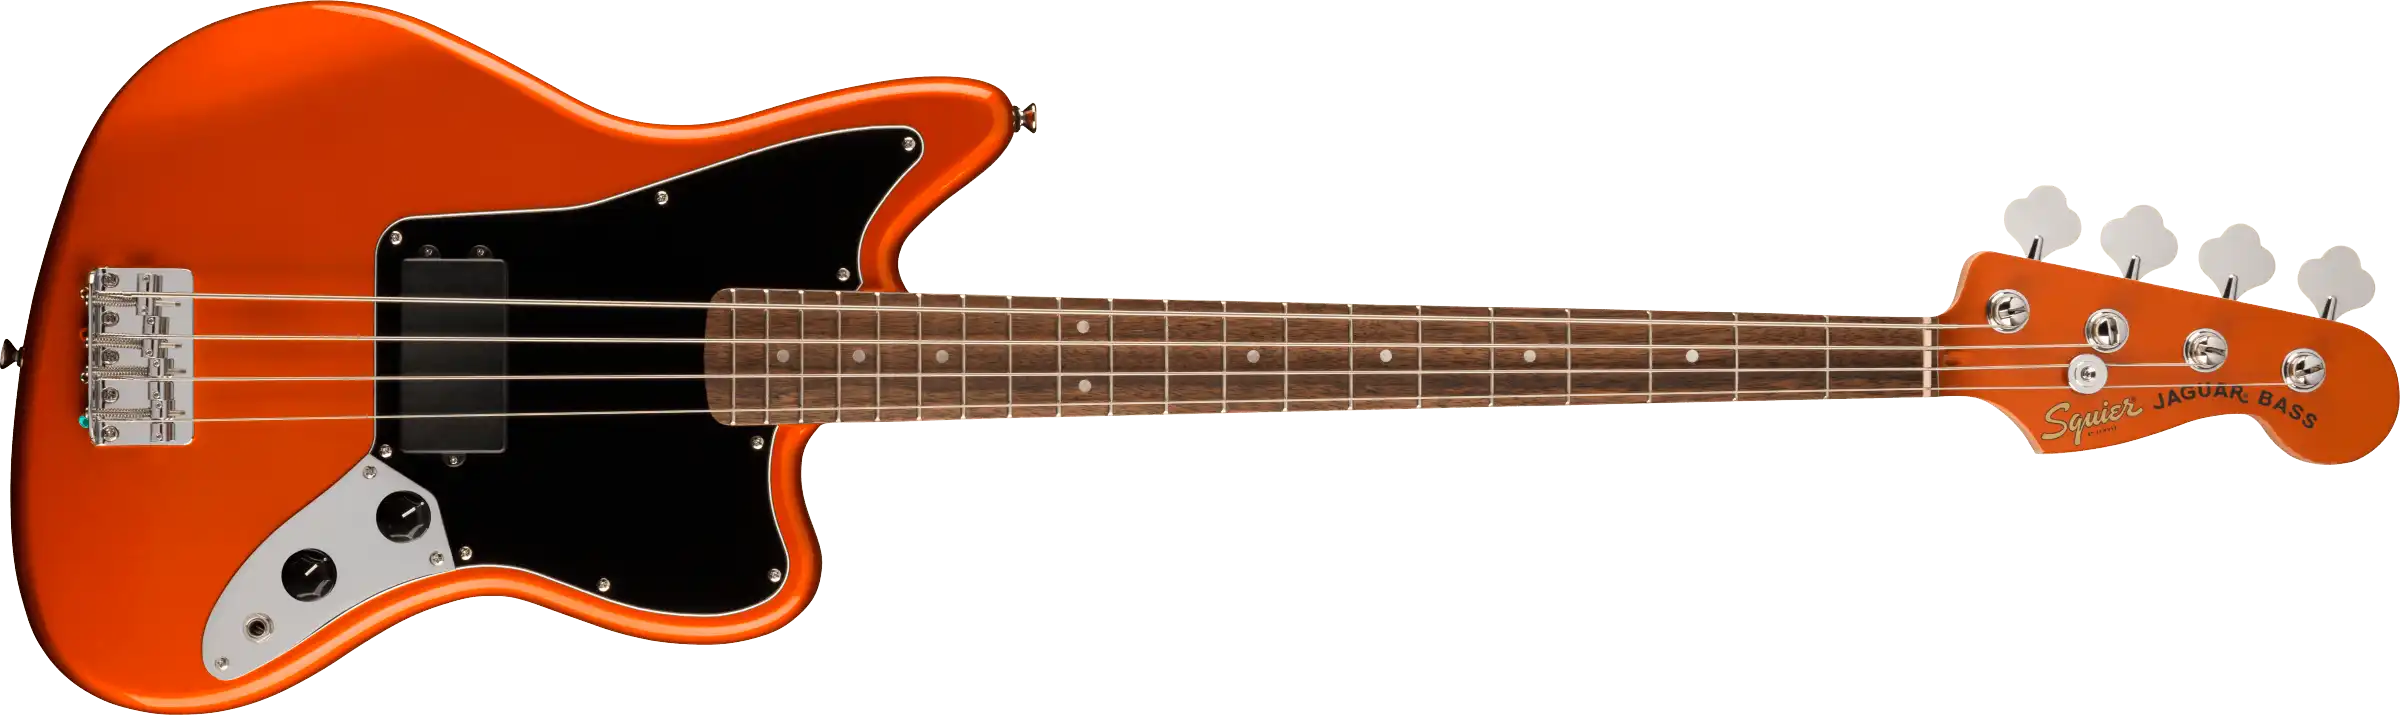 Squier Jaguar Bass Affinity metallic orange